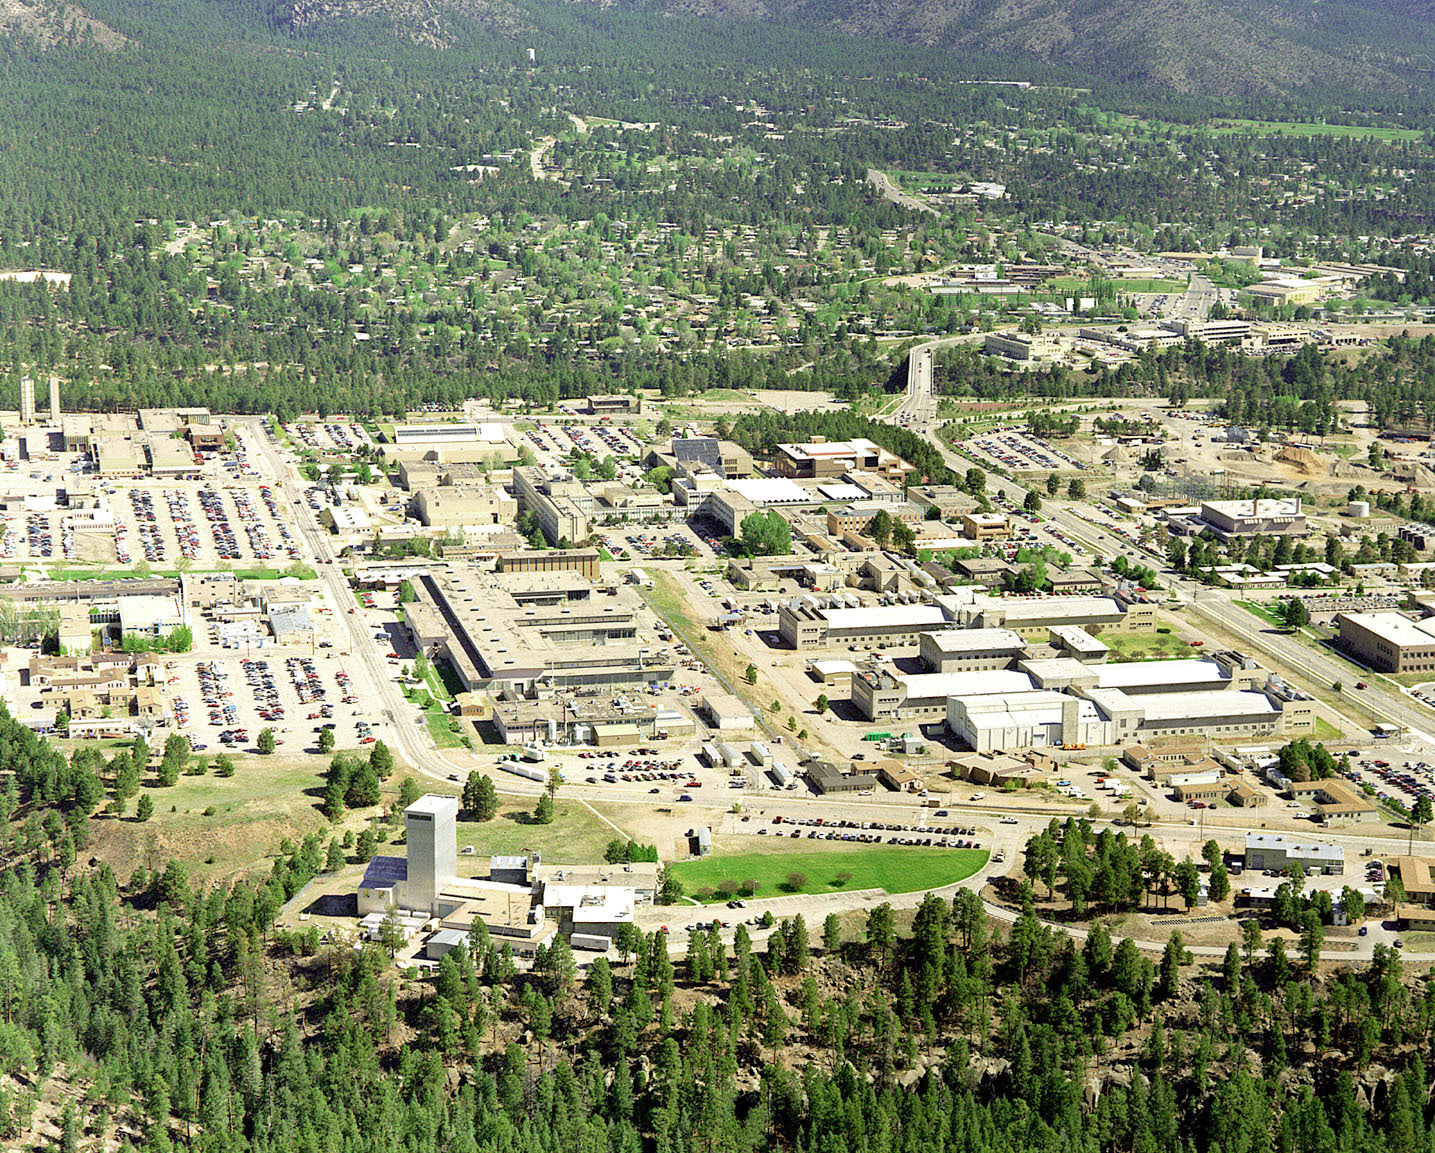 Los Alamos National Laboratory in New Mexico image - Free stock photo - Public Domain photo ...